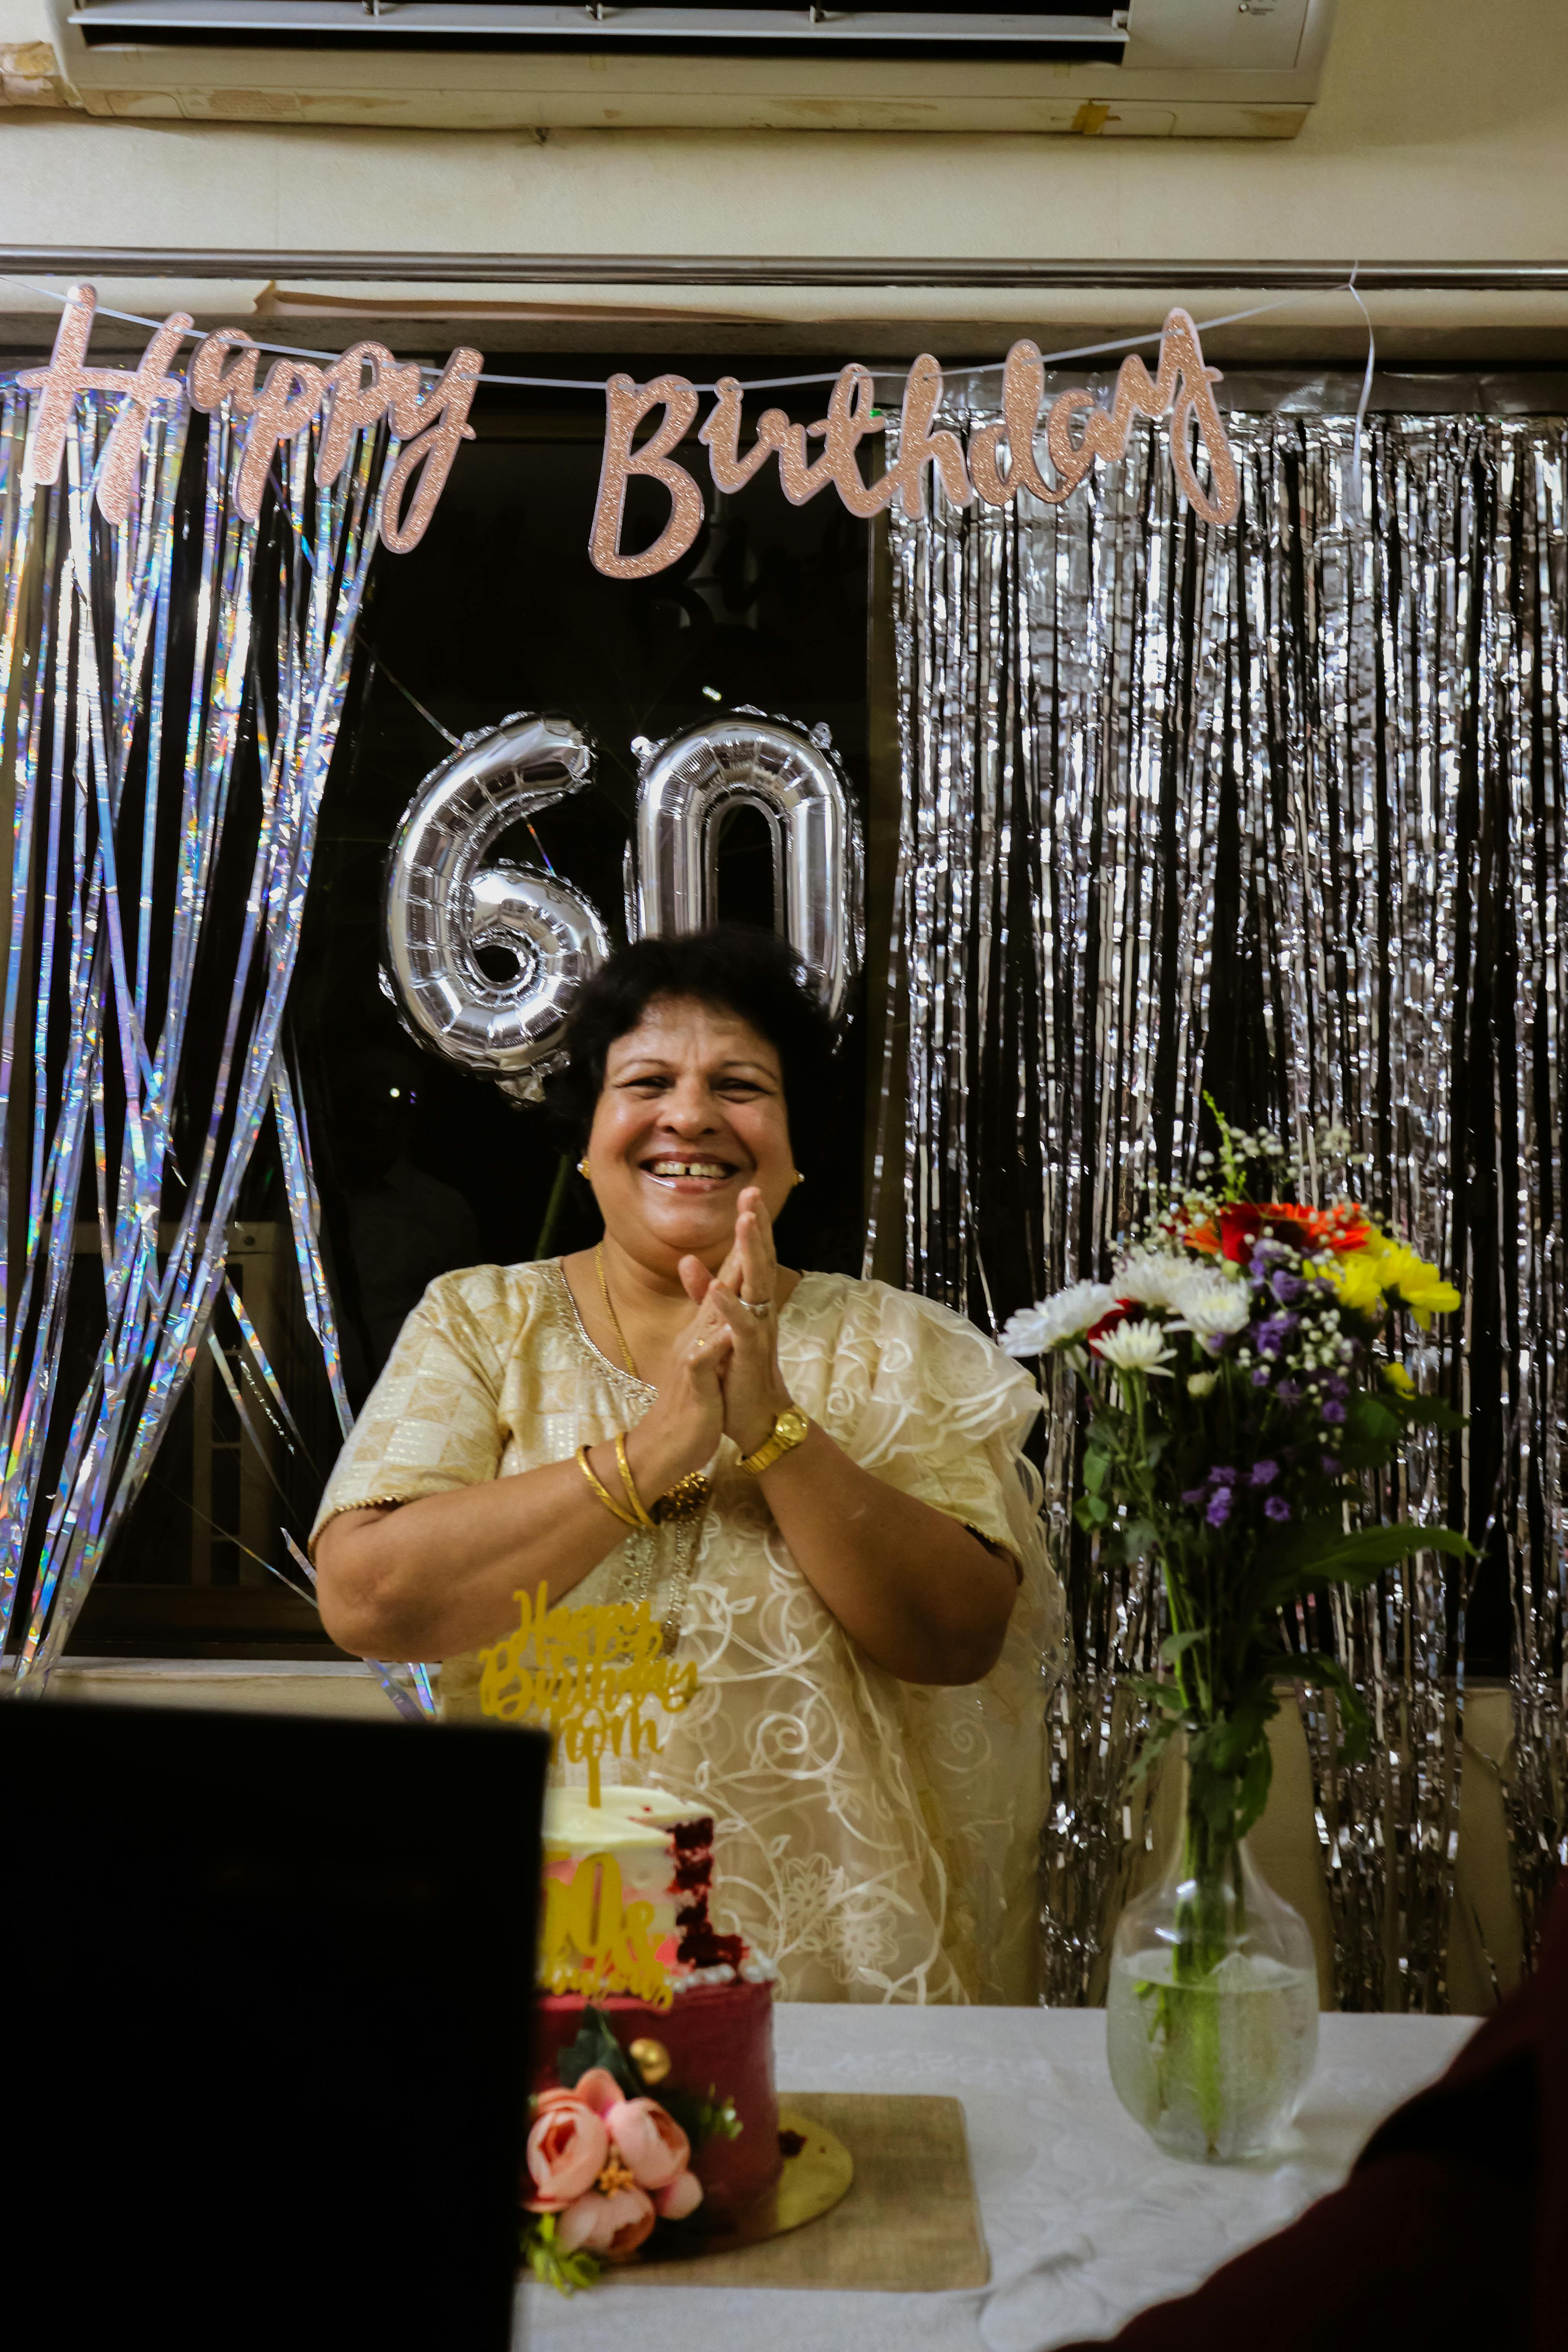 a woman celebrating her birthday